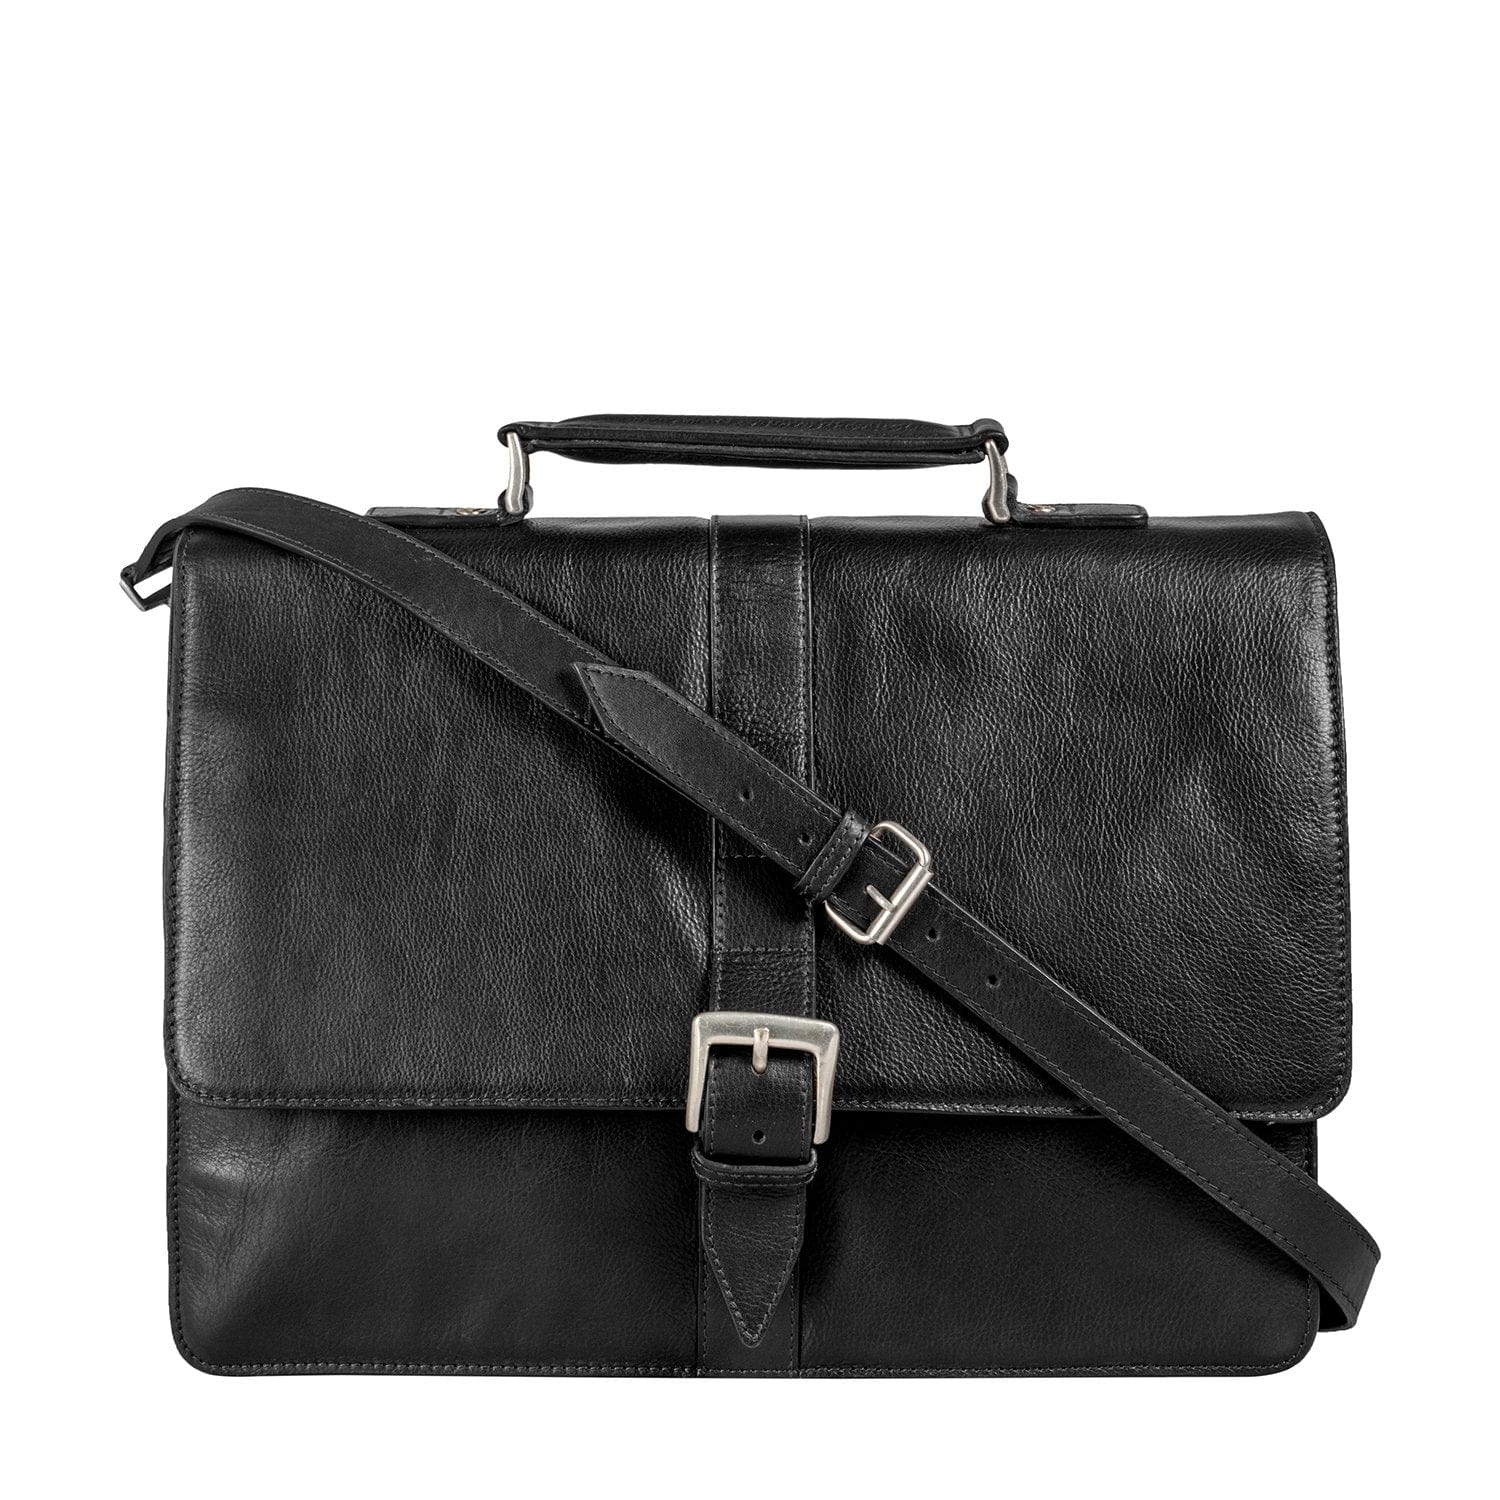 Hidesign - Hudson Men's Large Leather Briefcase